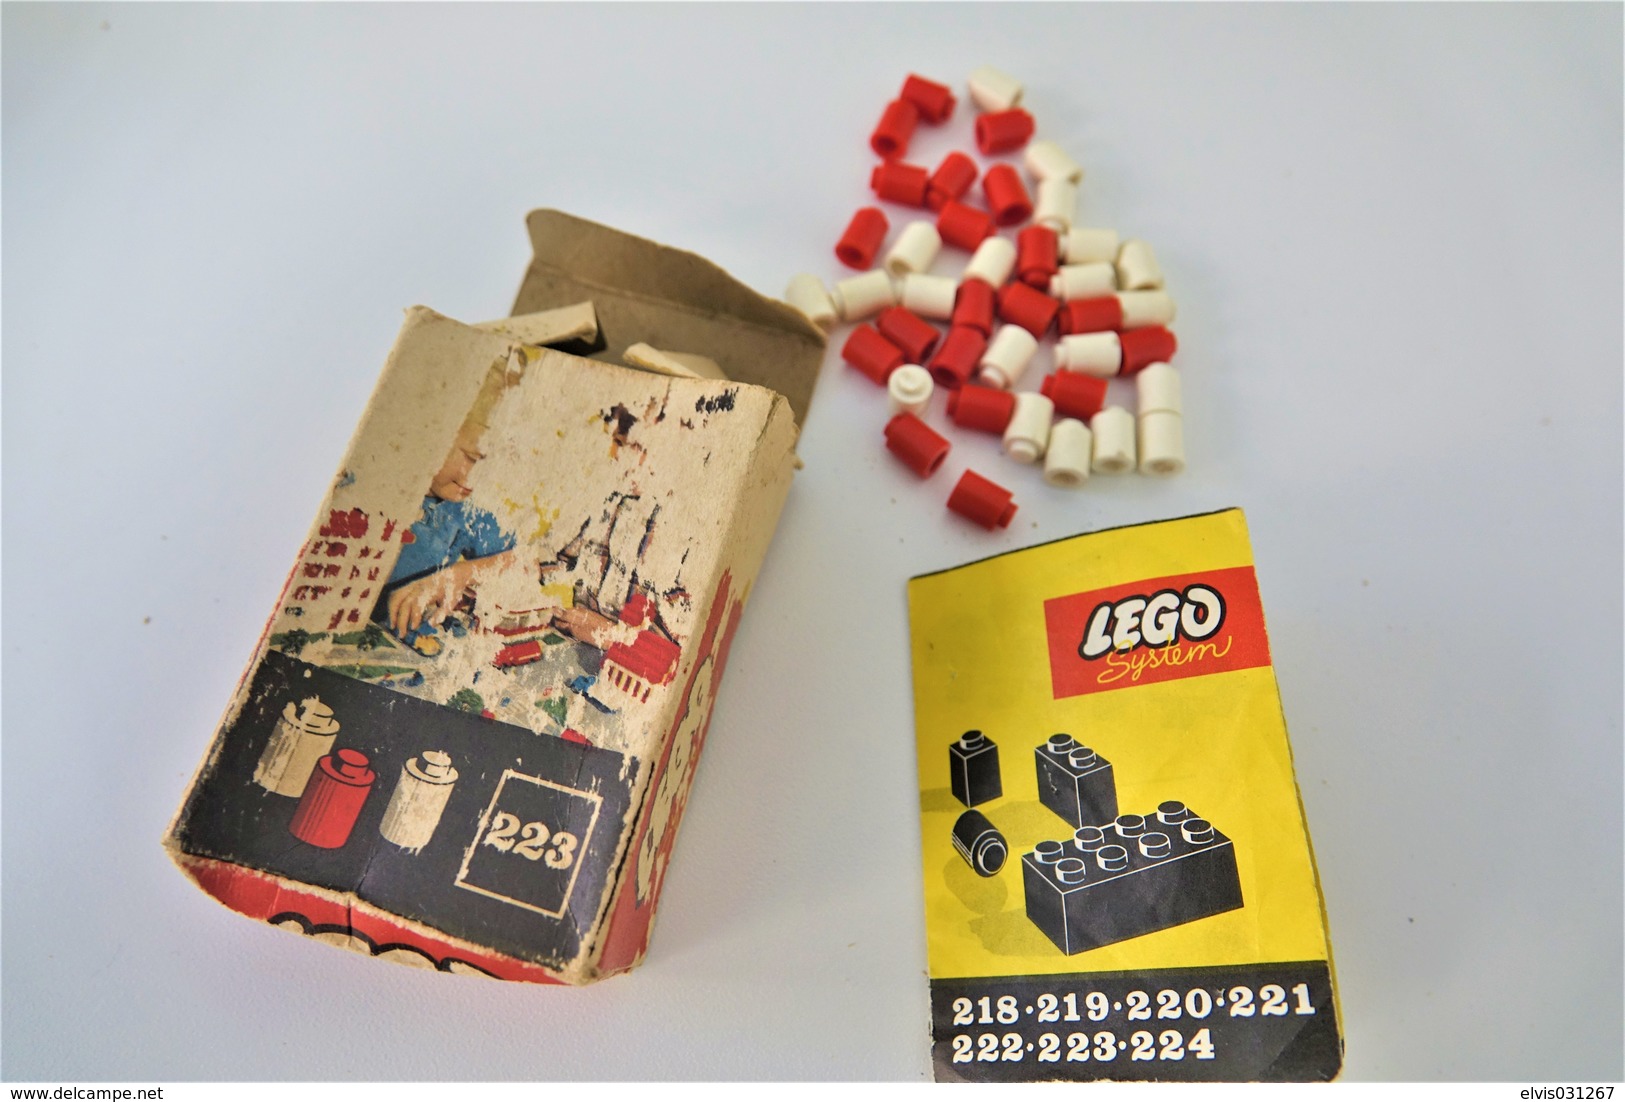 LEGO - 223 system 1 x 1 Round Bricks - Original Lego 1958 - Vintage